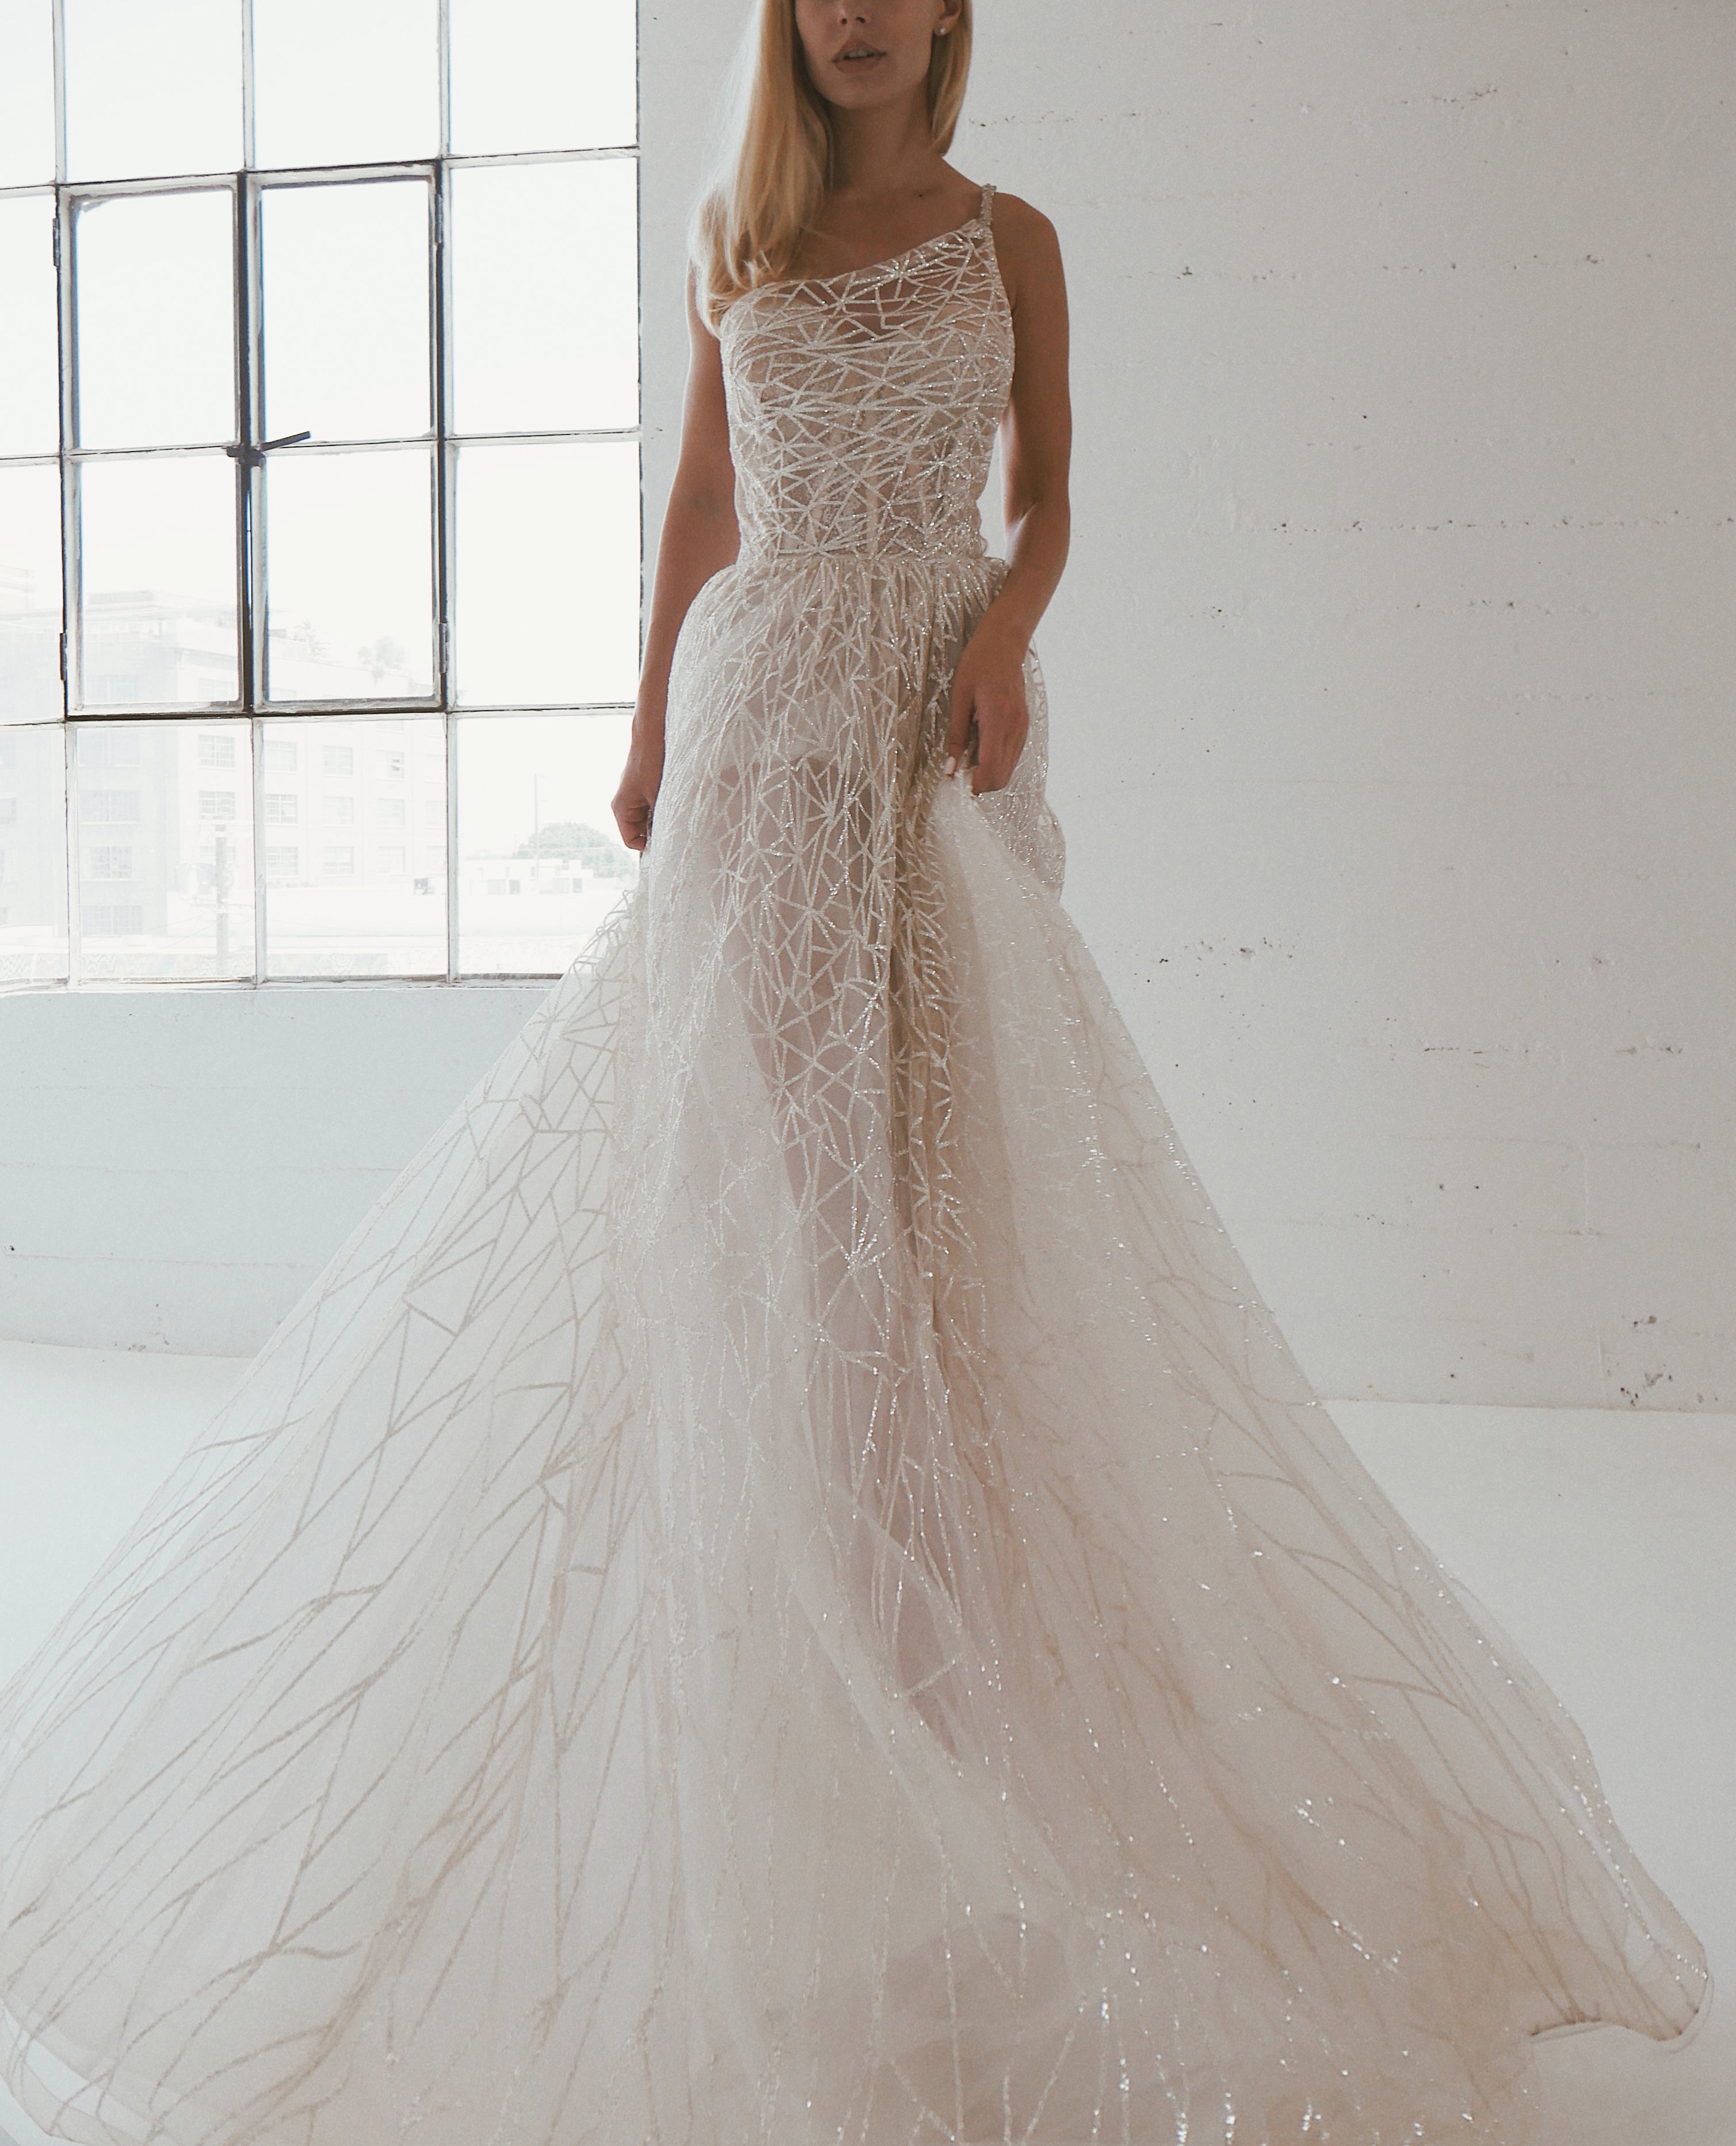 Taylor swift inspired sparkling wedding dresses by Lauren Elaine Bridal Los Angeles